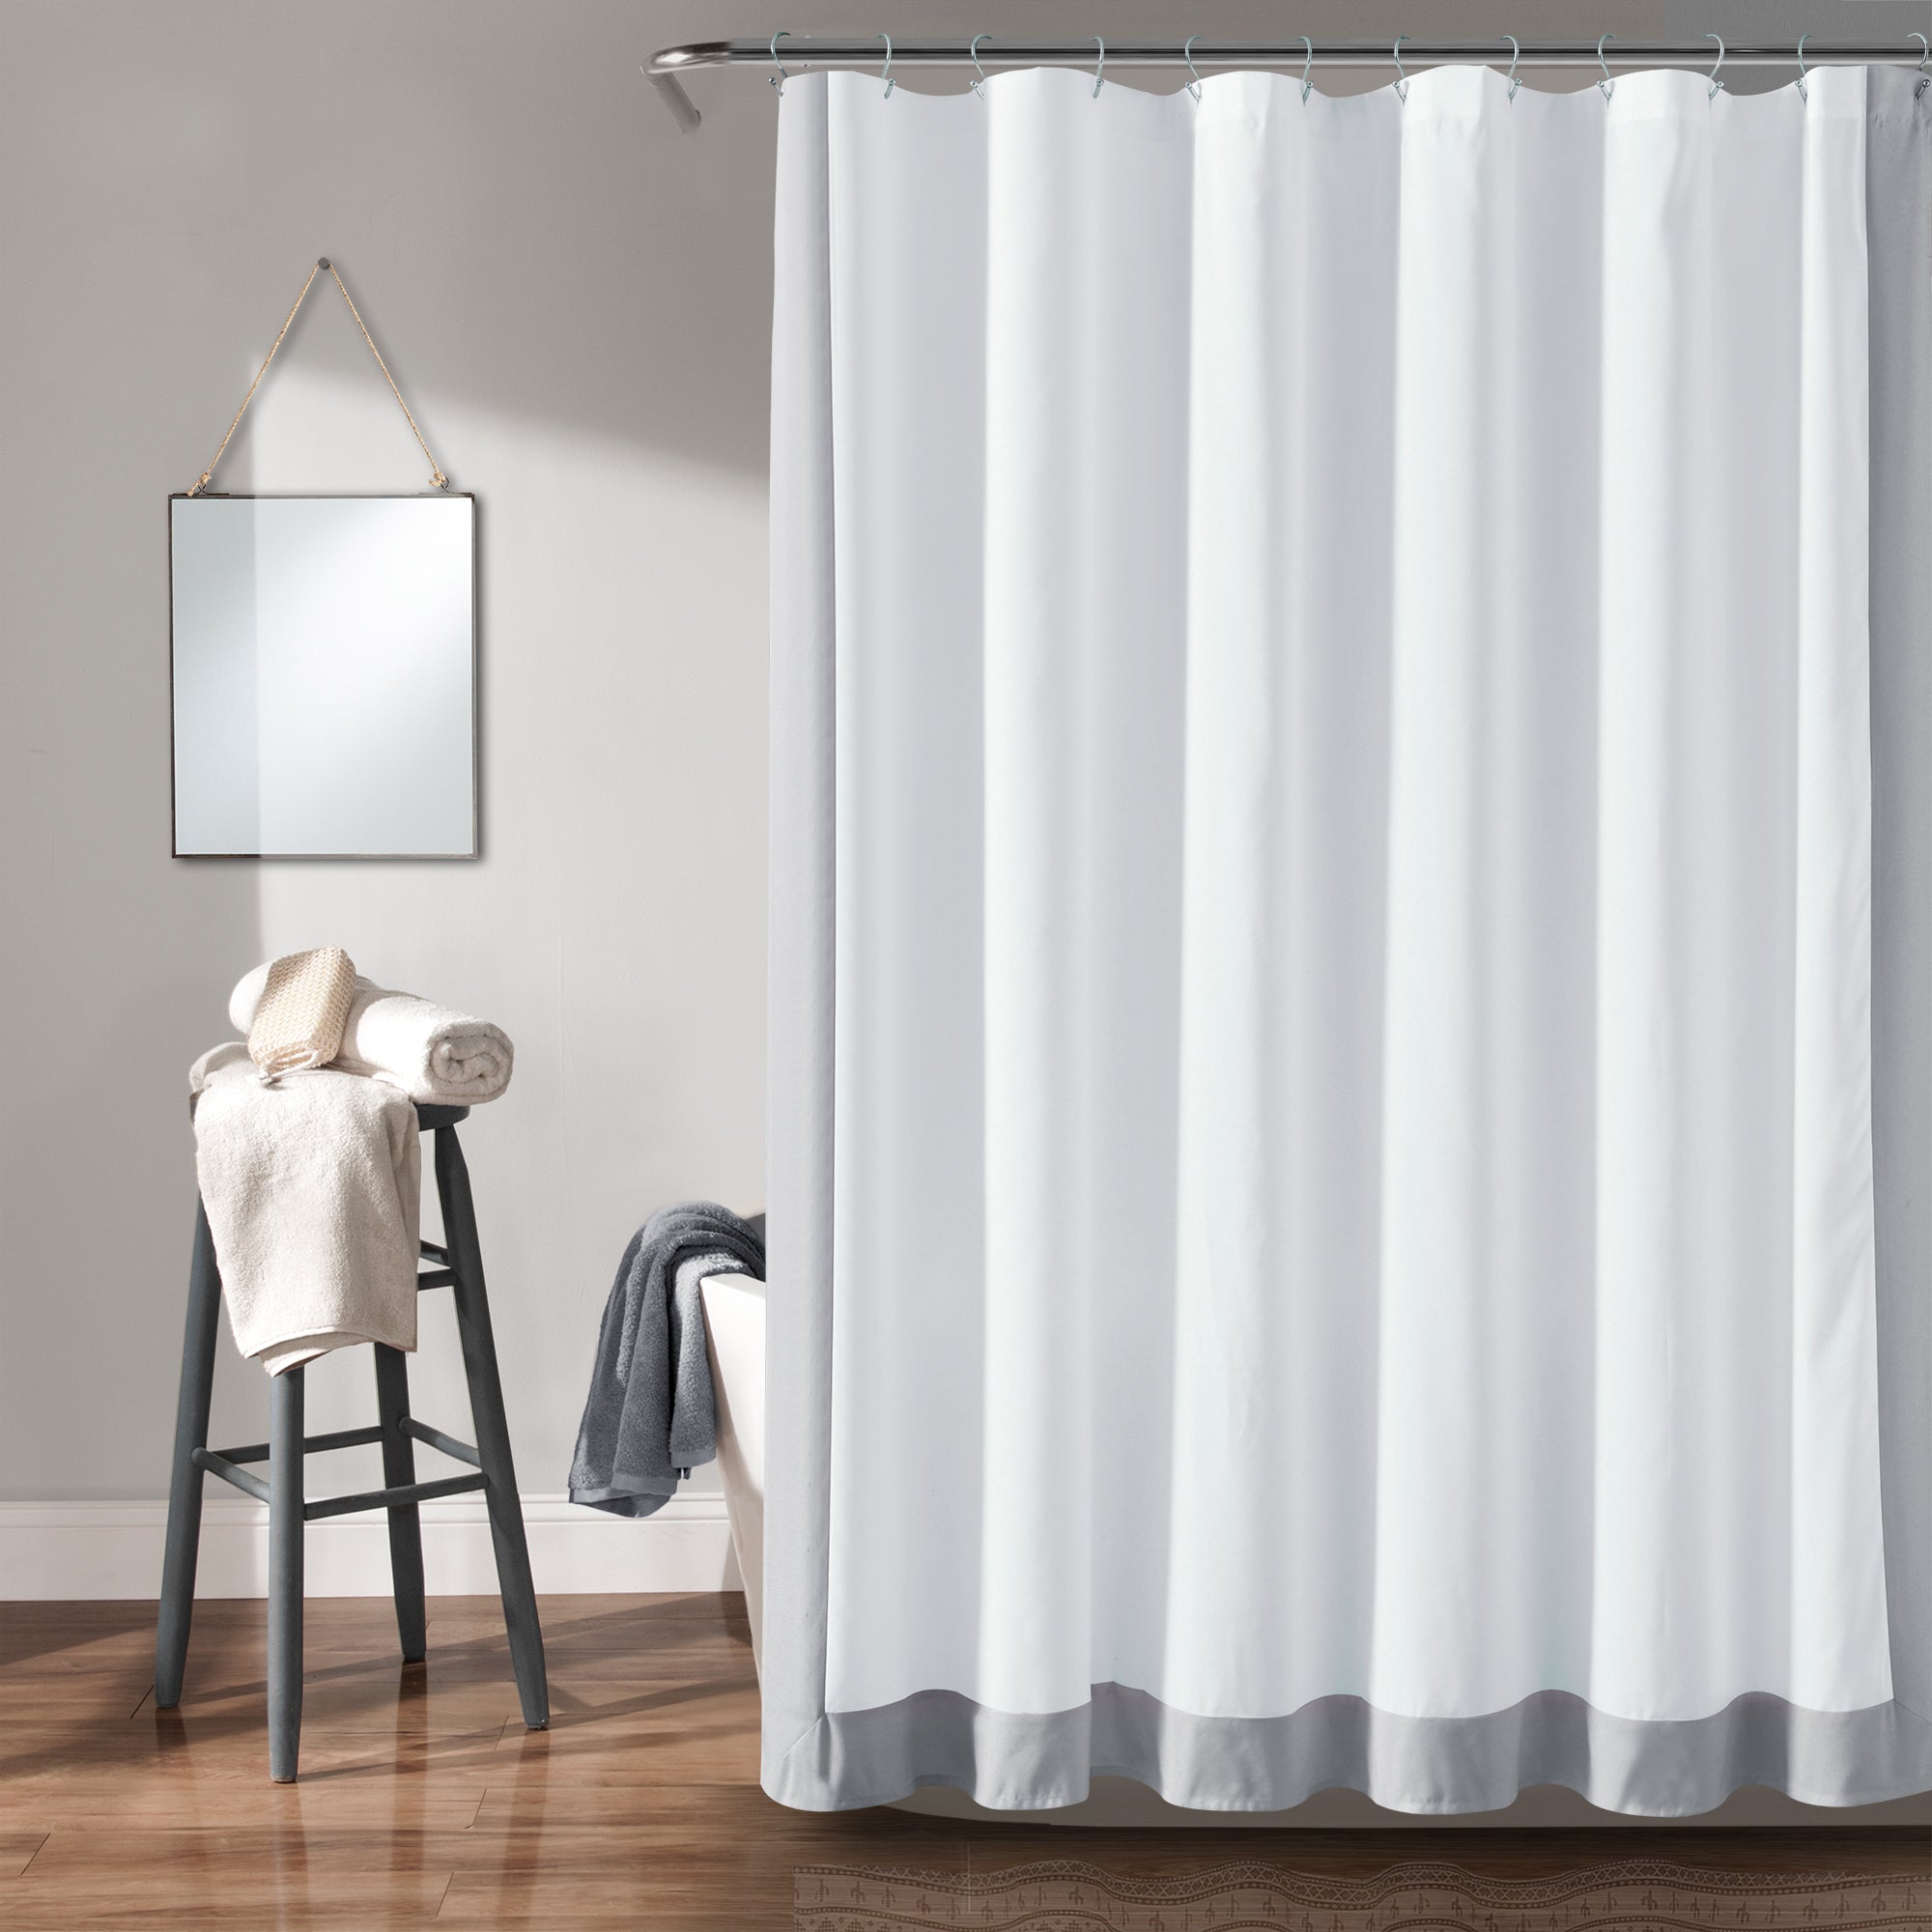 Lush Decor Shower Curtains: New Arrivals – LushDecor